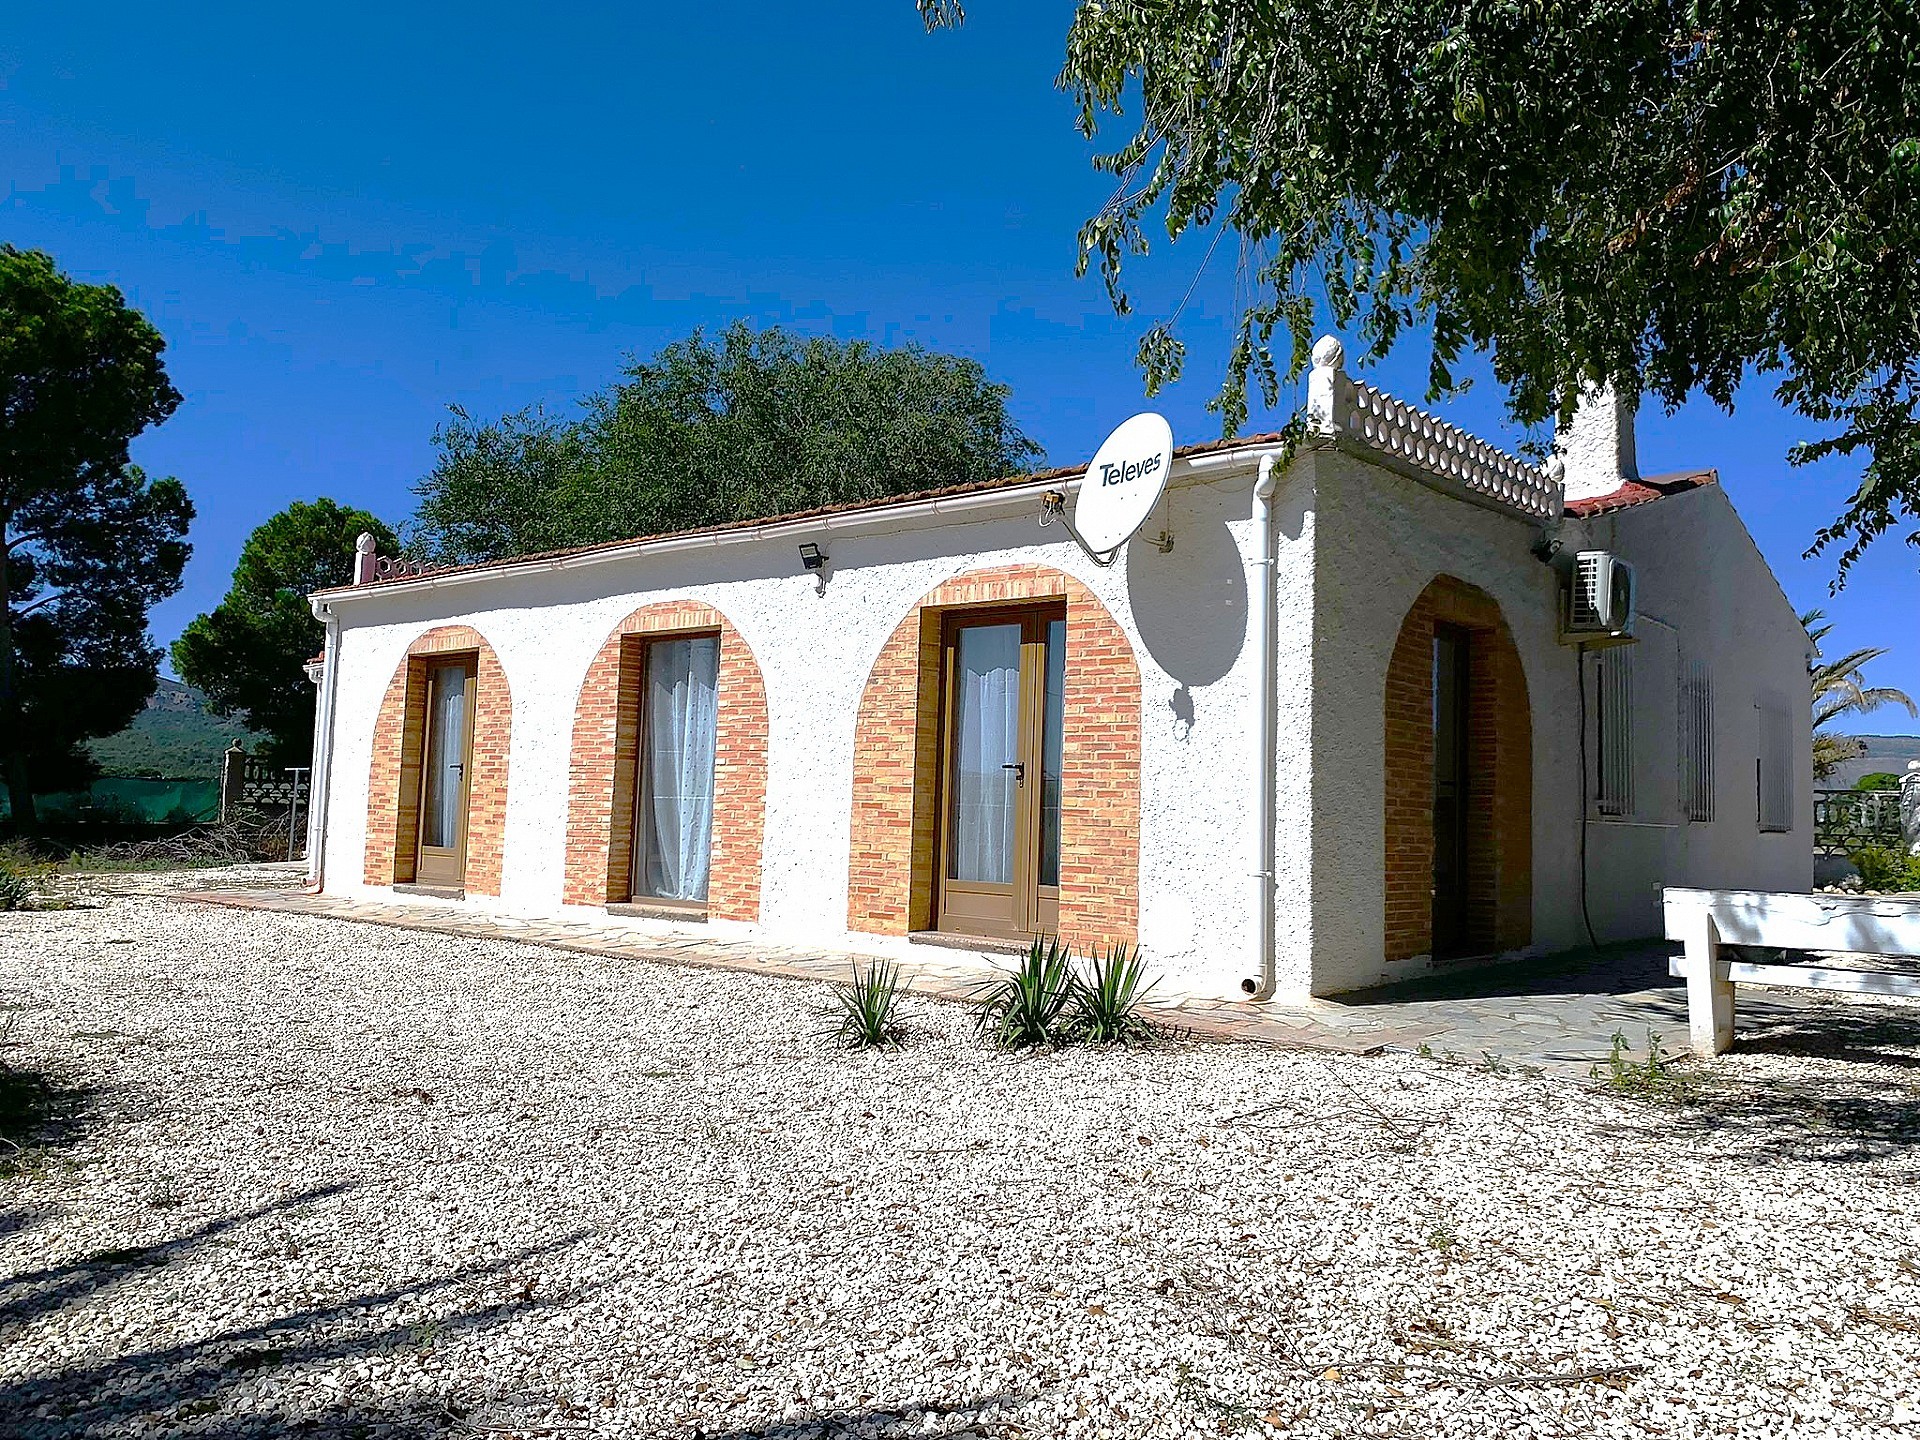 For sale: 4 bedroom house / villa in Caudete, Costa Blanca